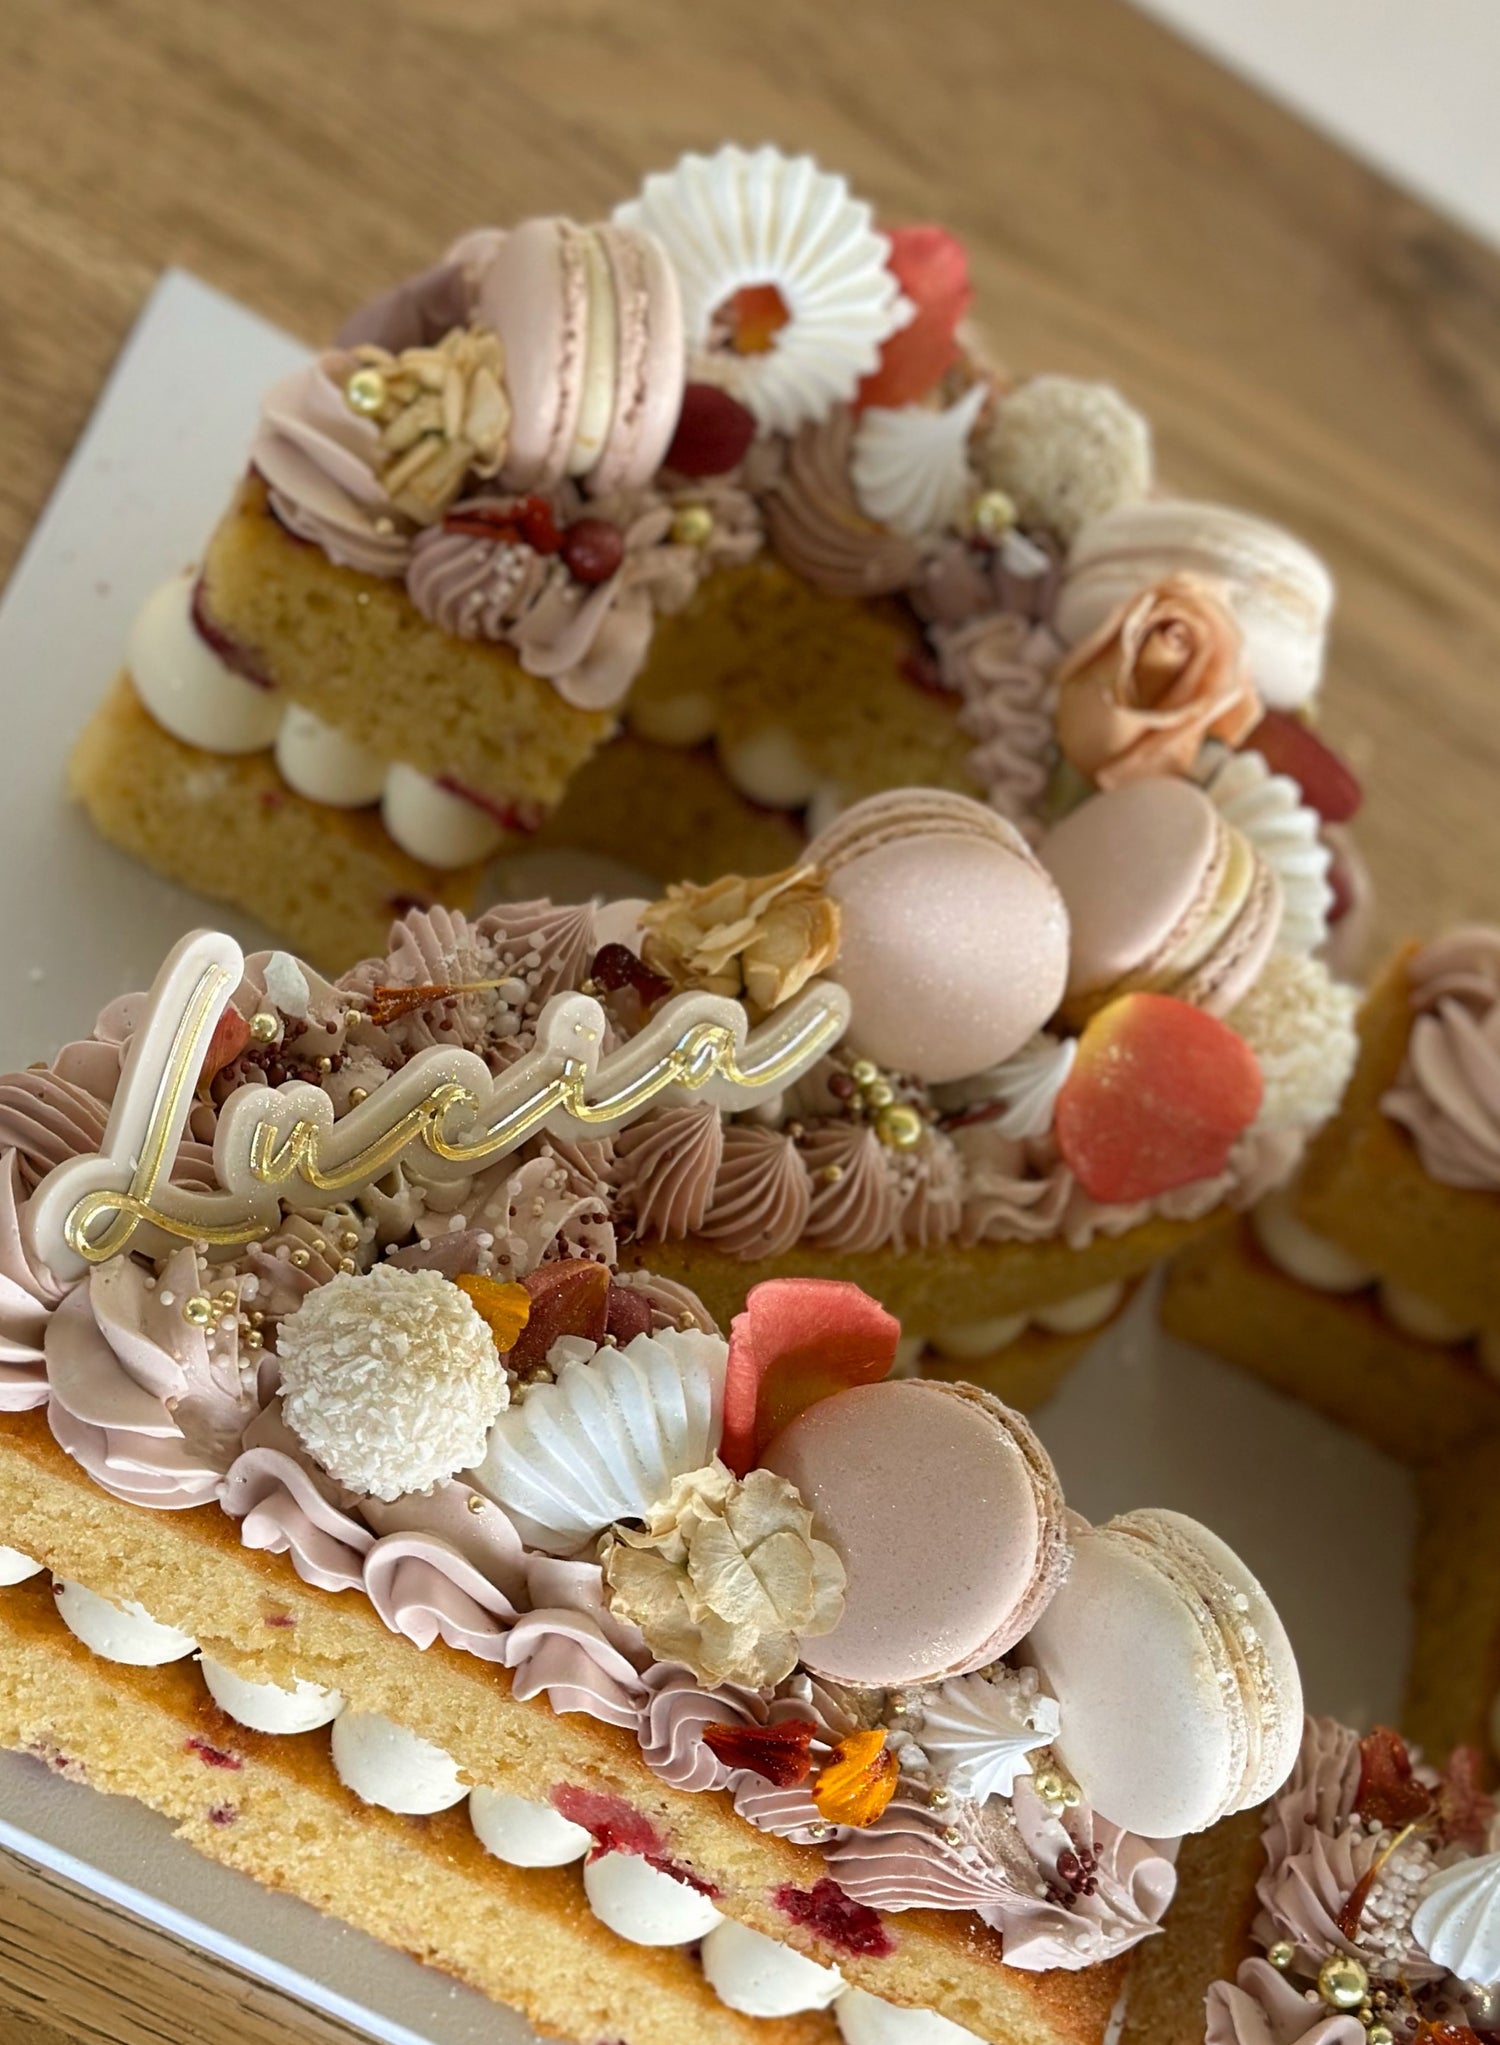 La Rêverie Patisserie - Letter S cake in vanilla, fresh fruits and custard  creme.🎂 . . #birthdaycake #vanilla #chocolate #flowers #cakes  #larêveriepatisserie #lrpatisserie #pink #love #veganfeed #cakedesigner  #vegetarian #pastrychef #lettercake ...